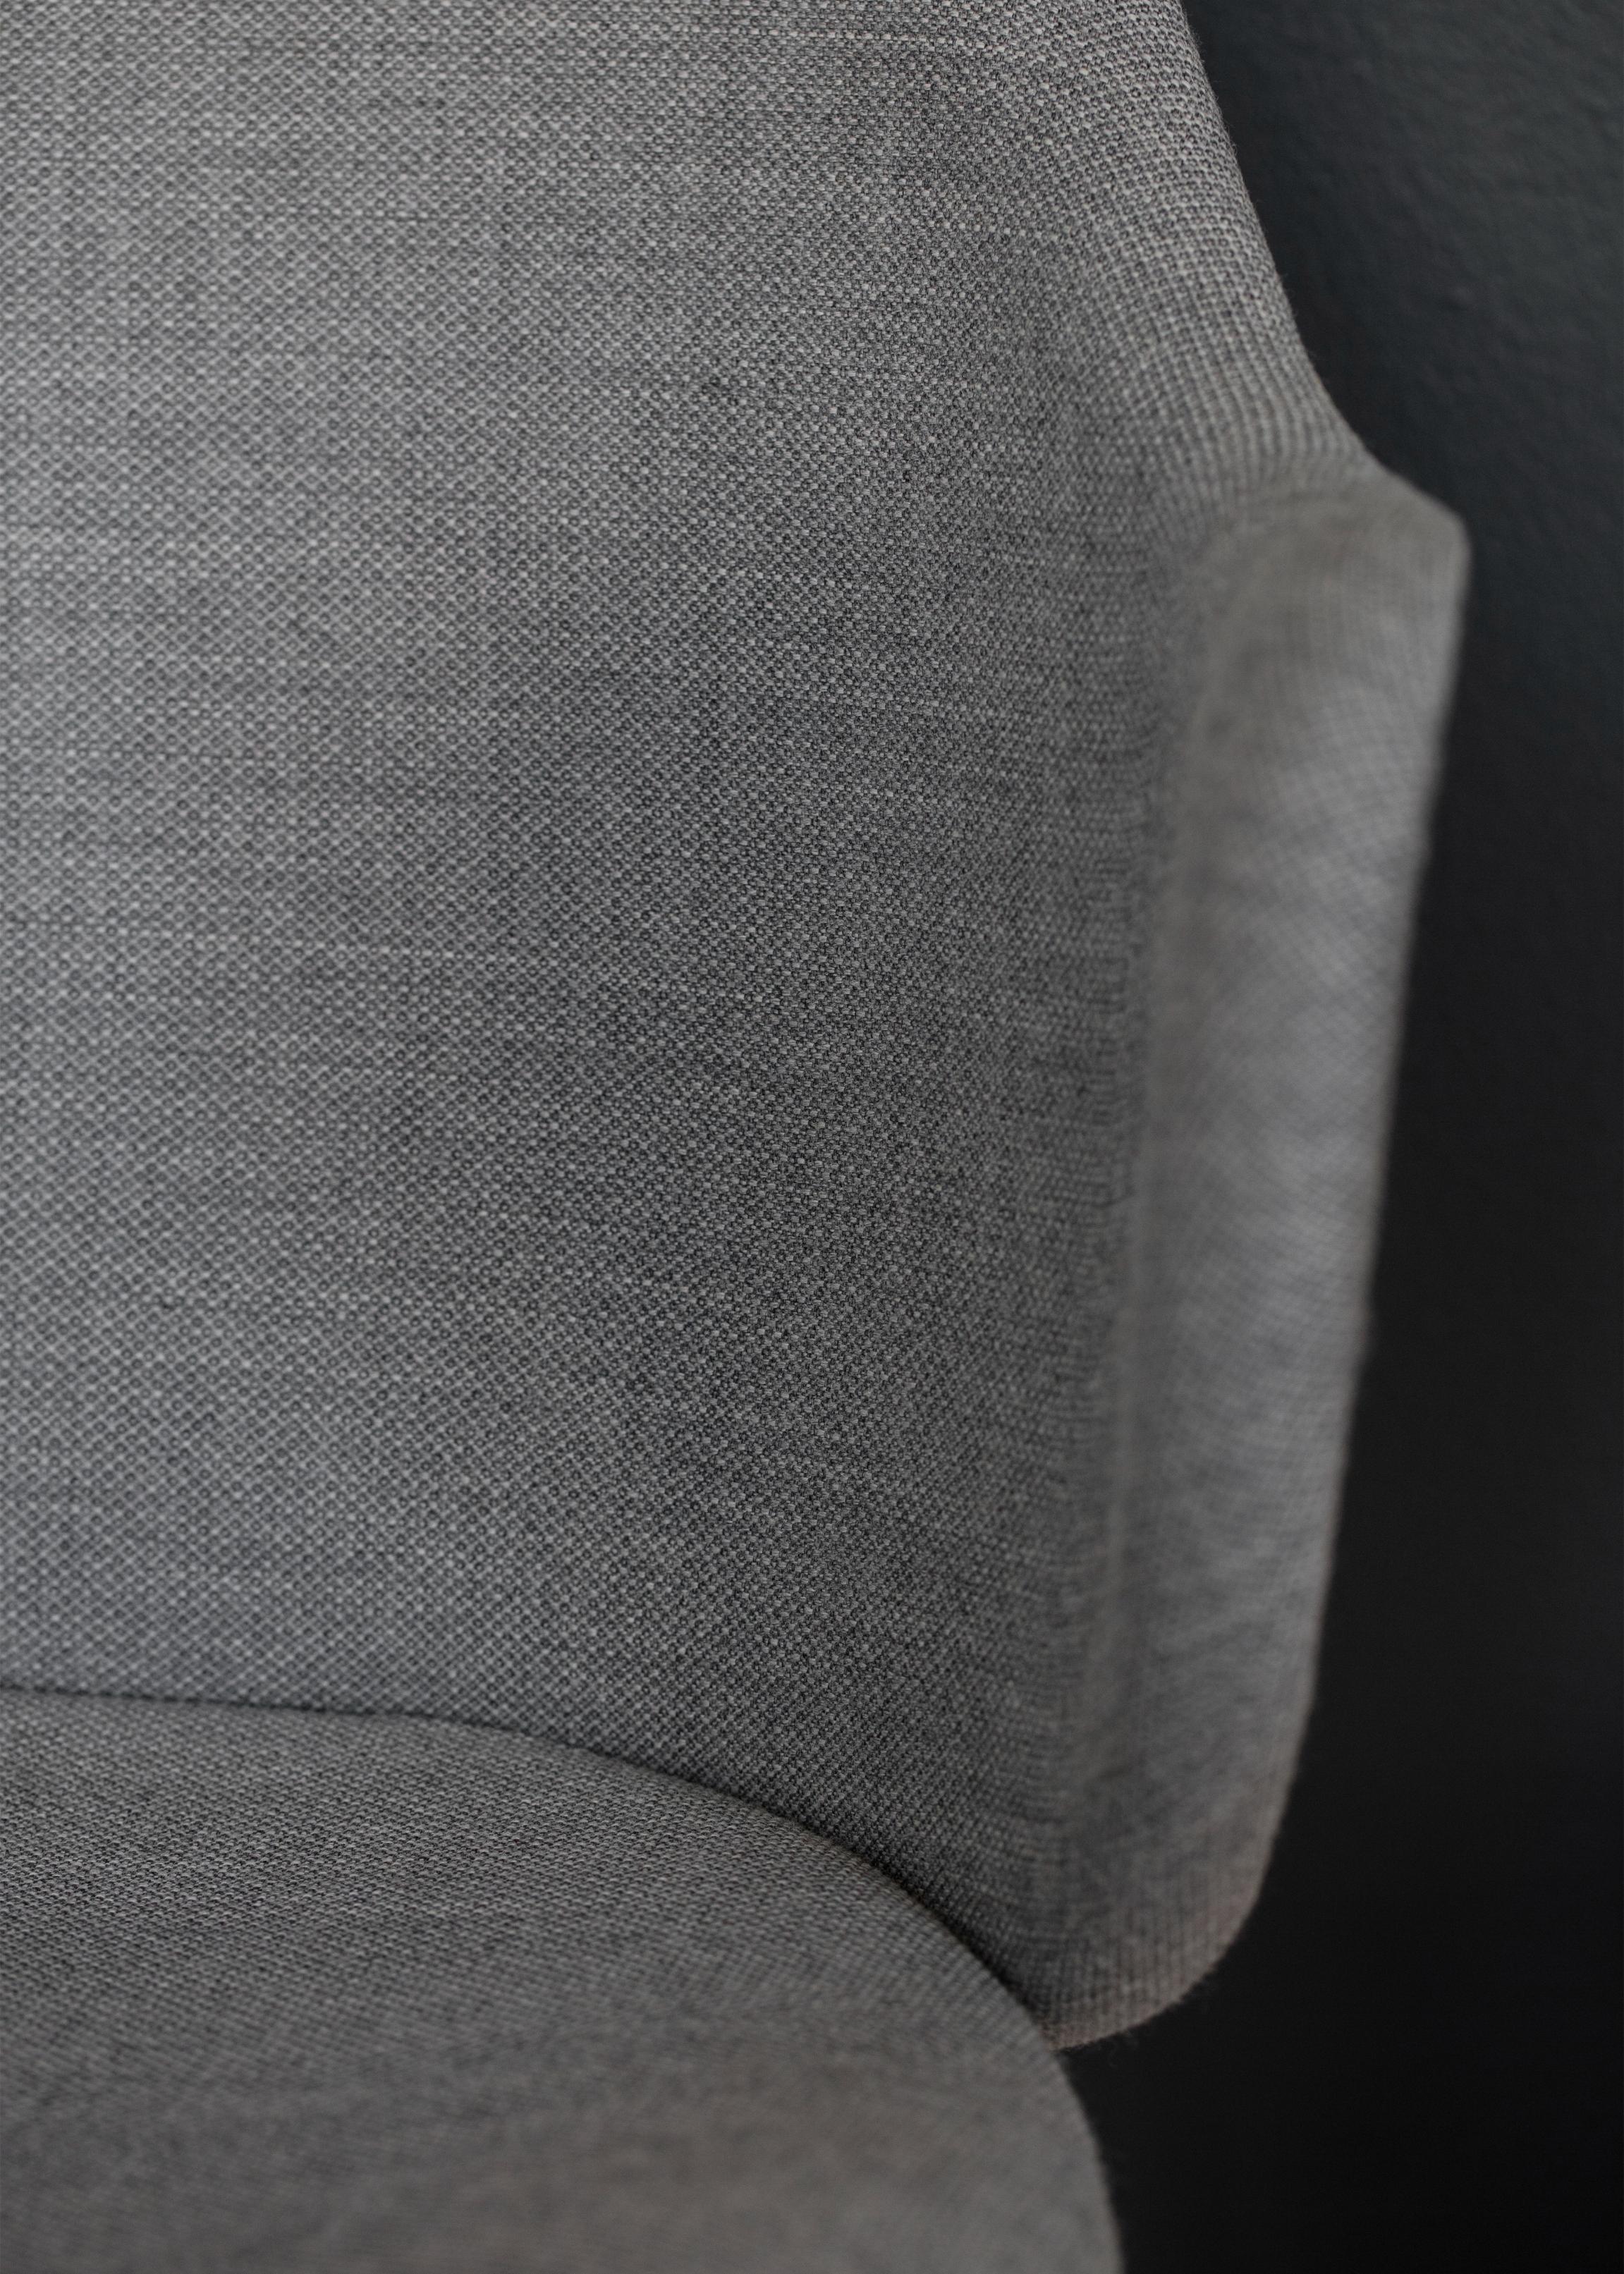 Textile Set of 4 Dark Grey Fiord Lassen Chairs by Lassen For Sale